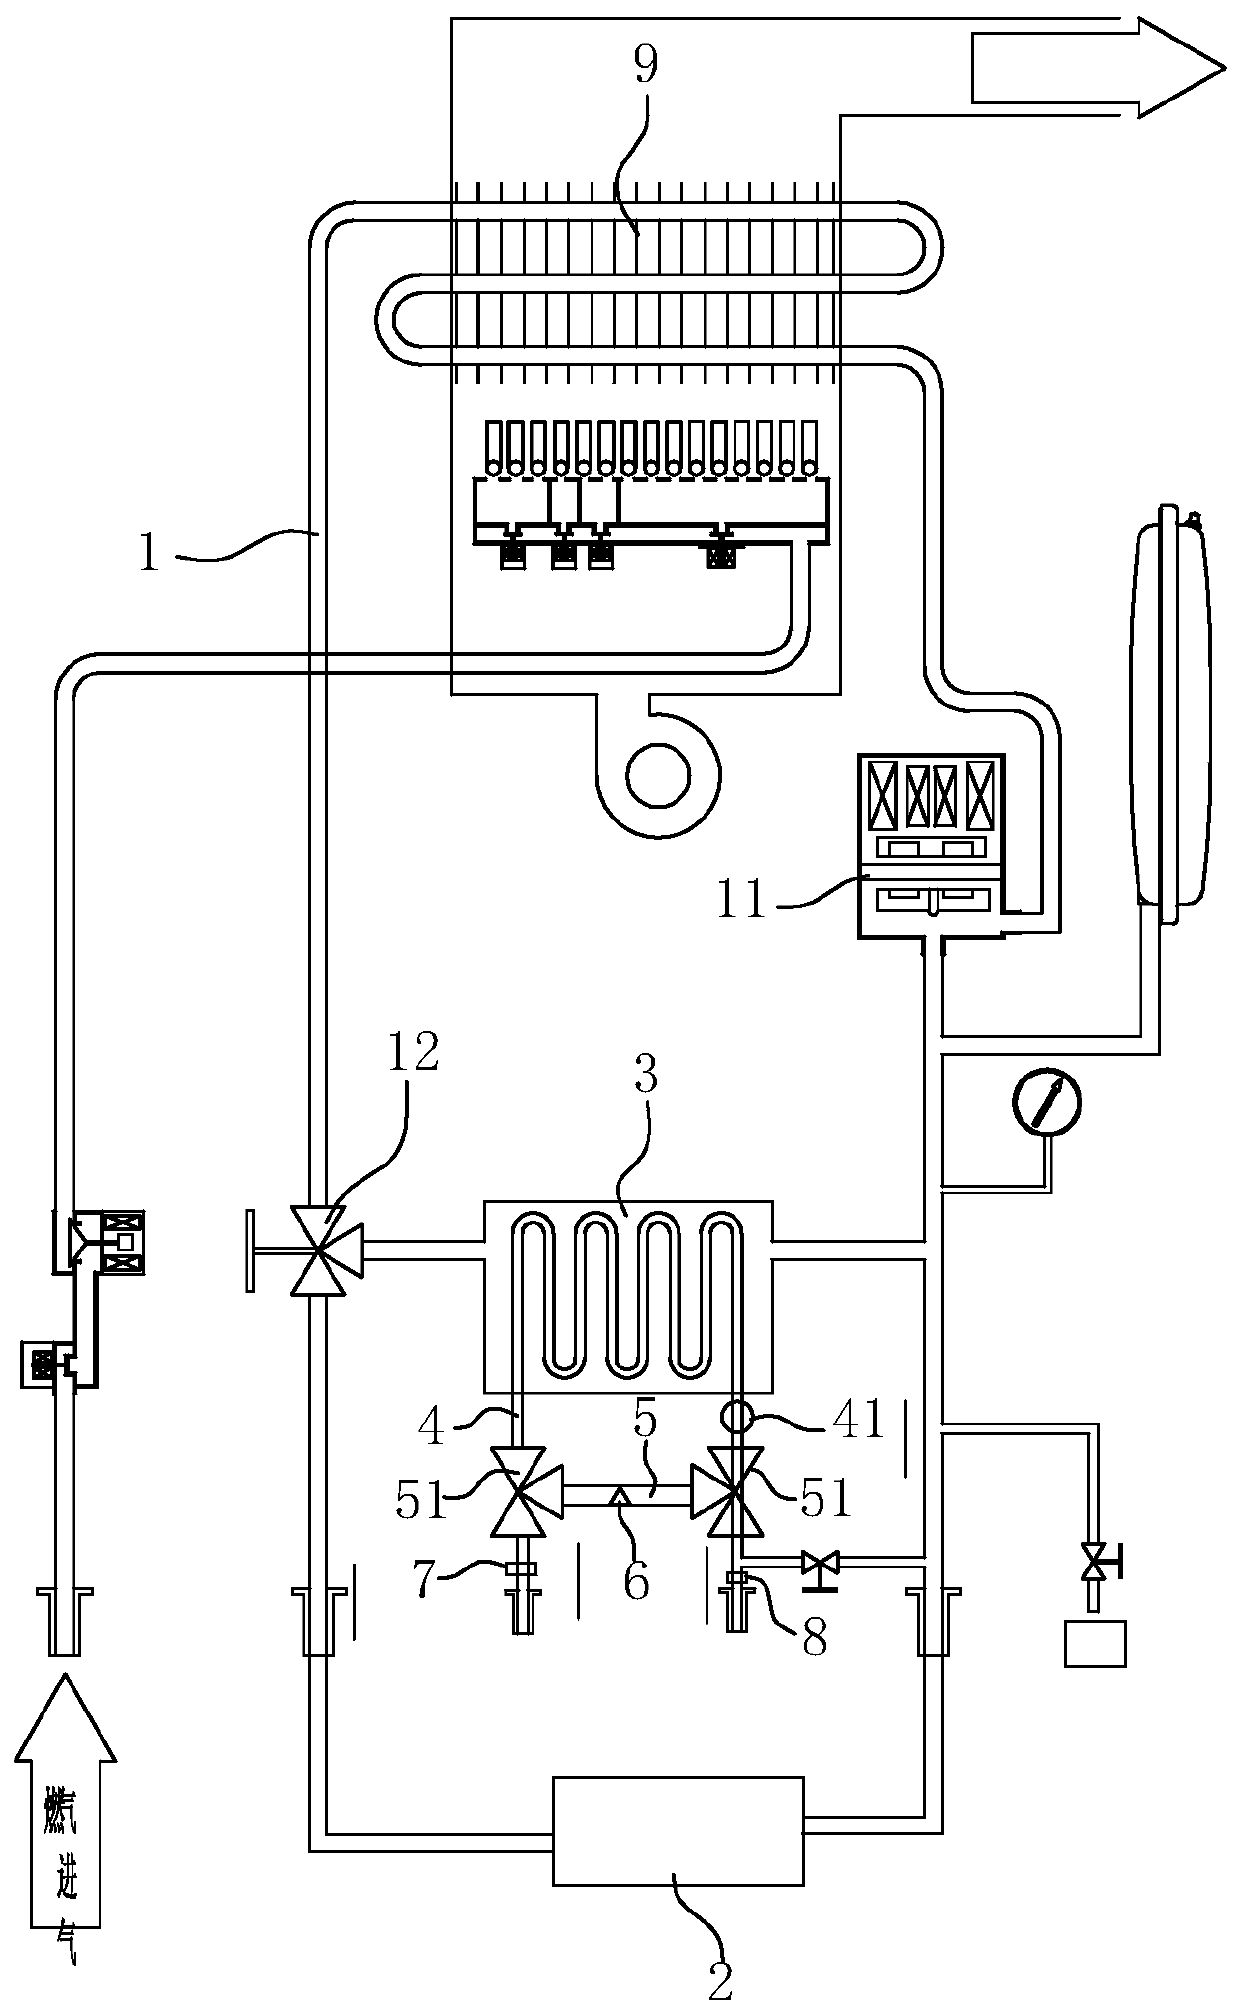 Dual-purpose furnace and control method of dual-purpose furnace